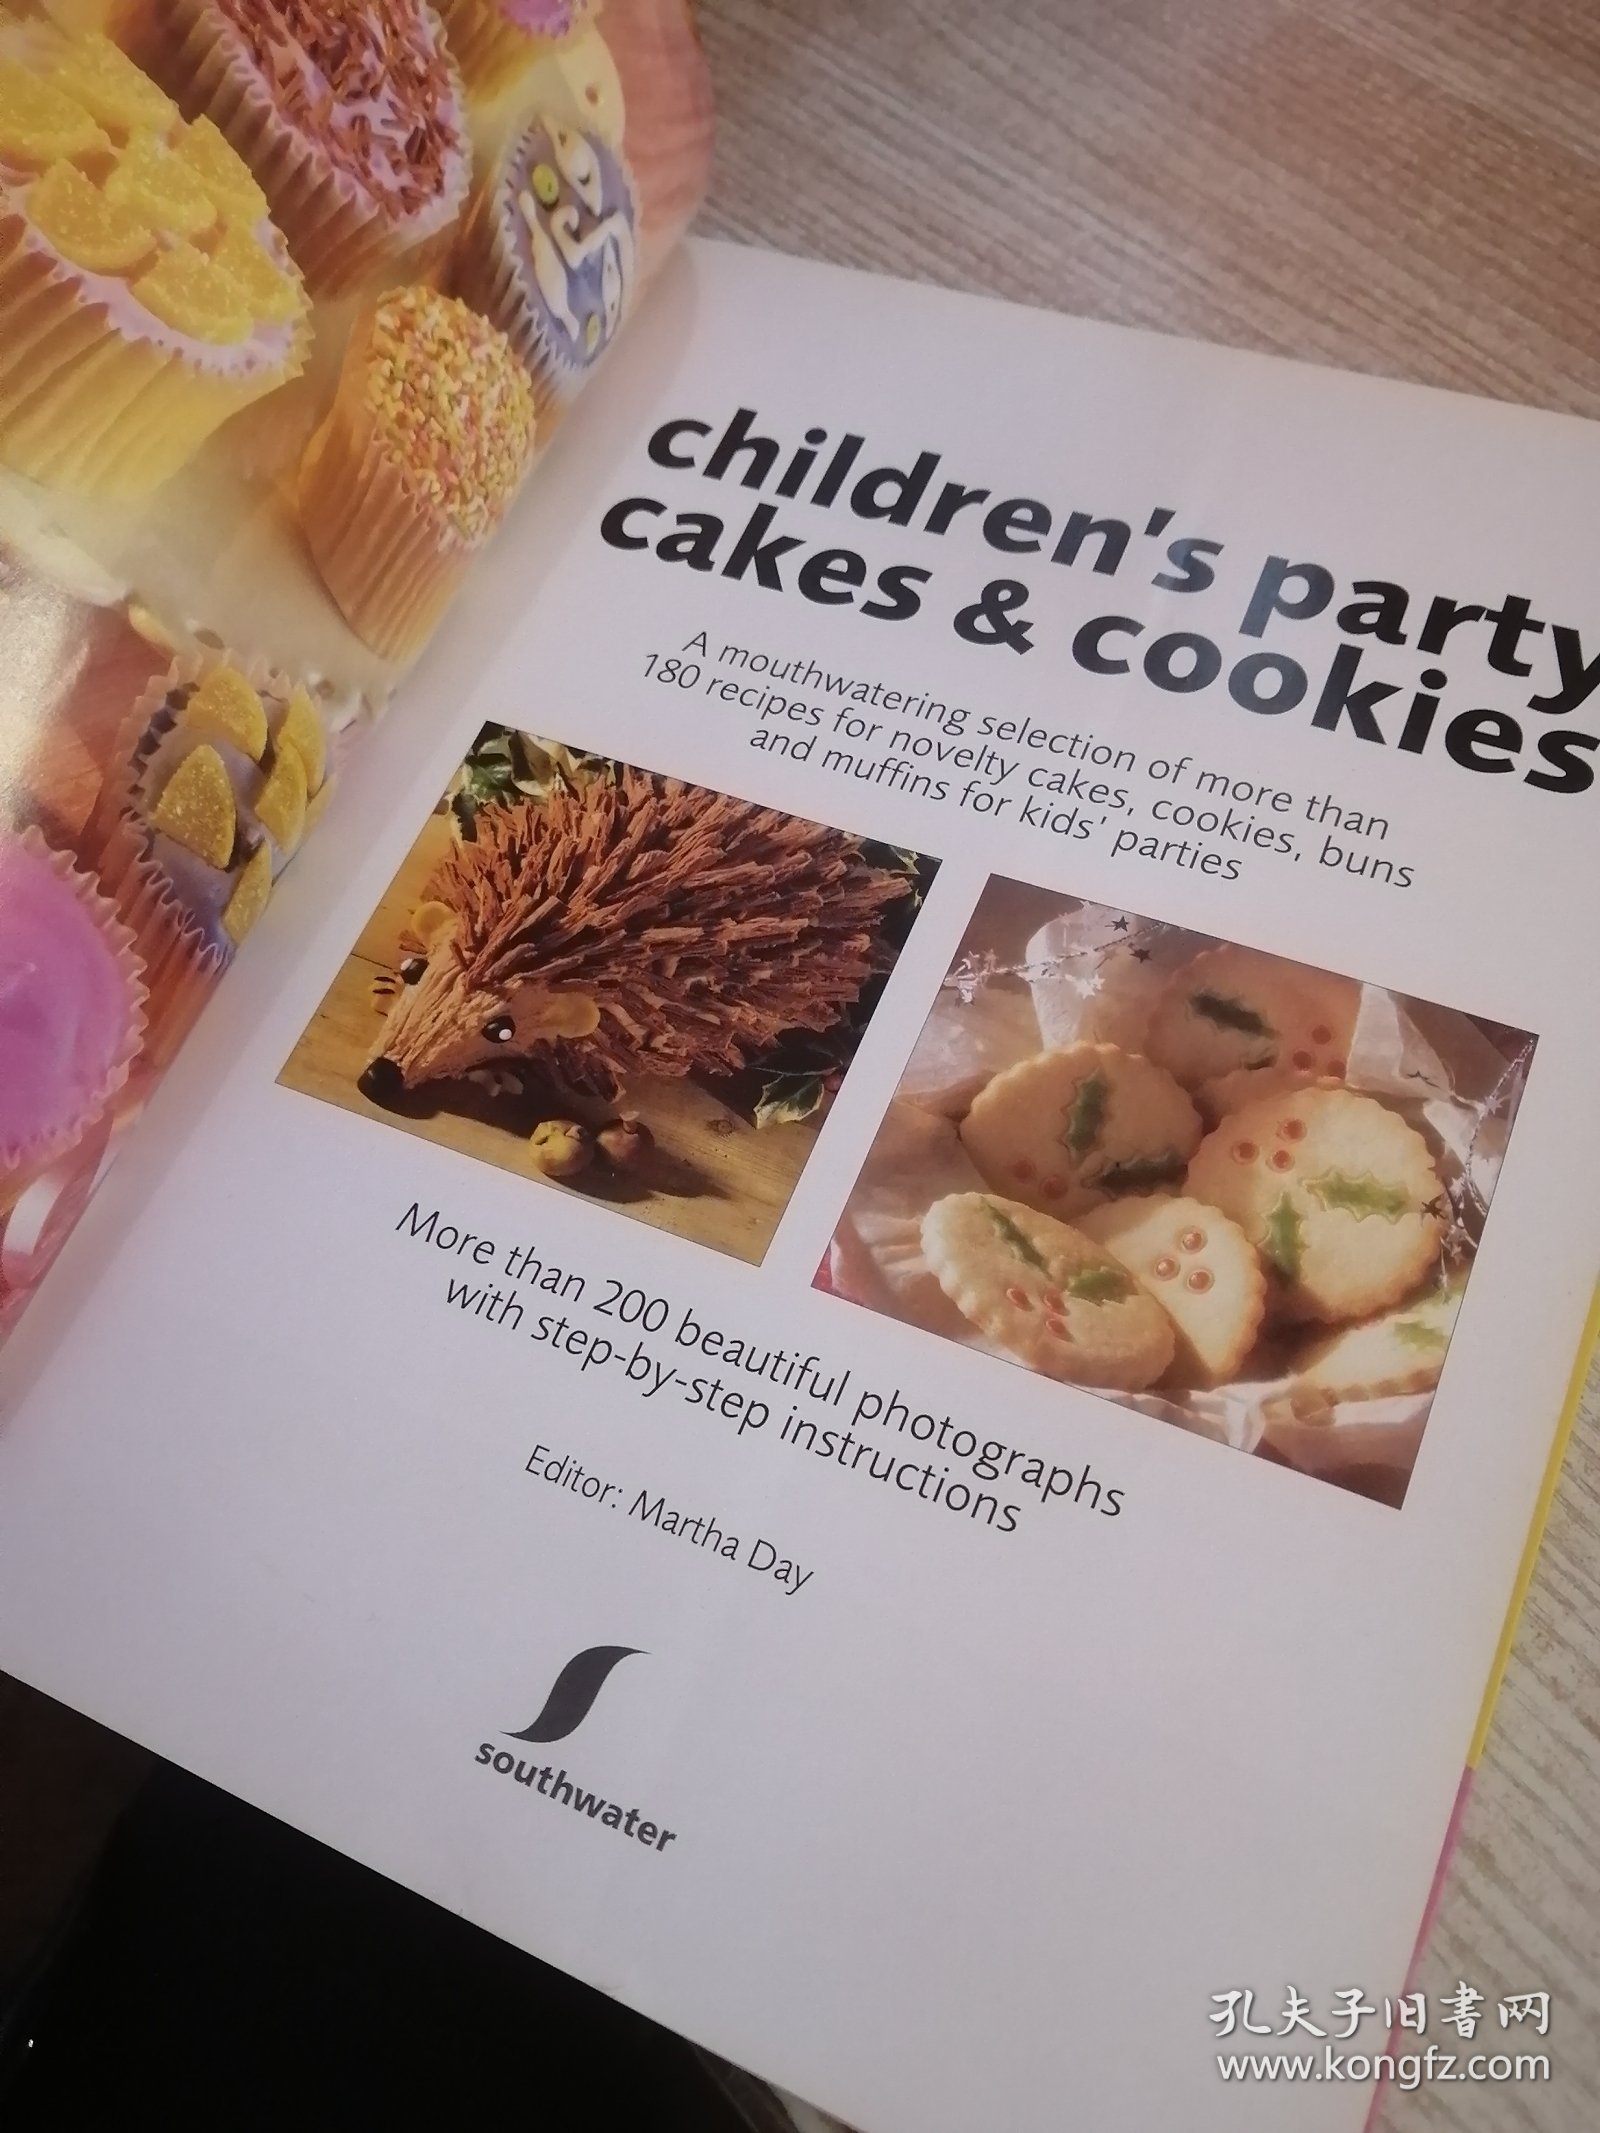 CHILDREN S PARTY CAKES COOKIES